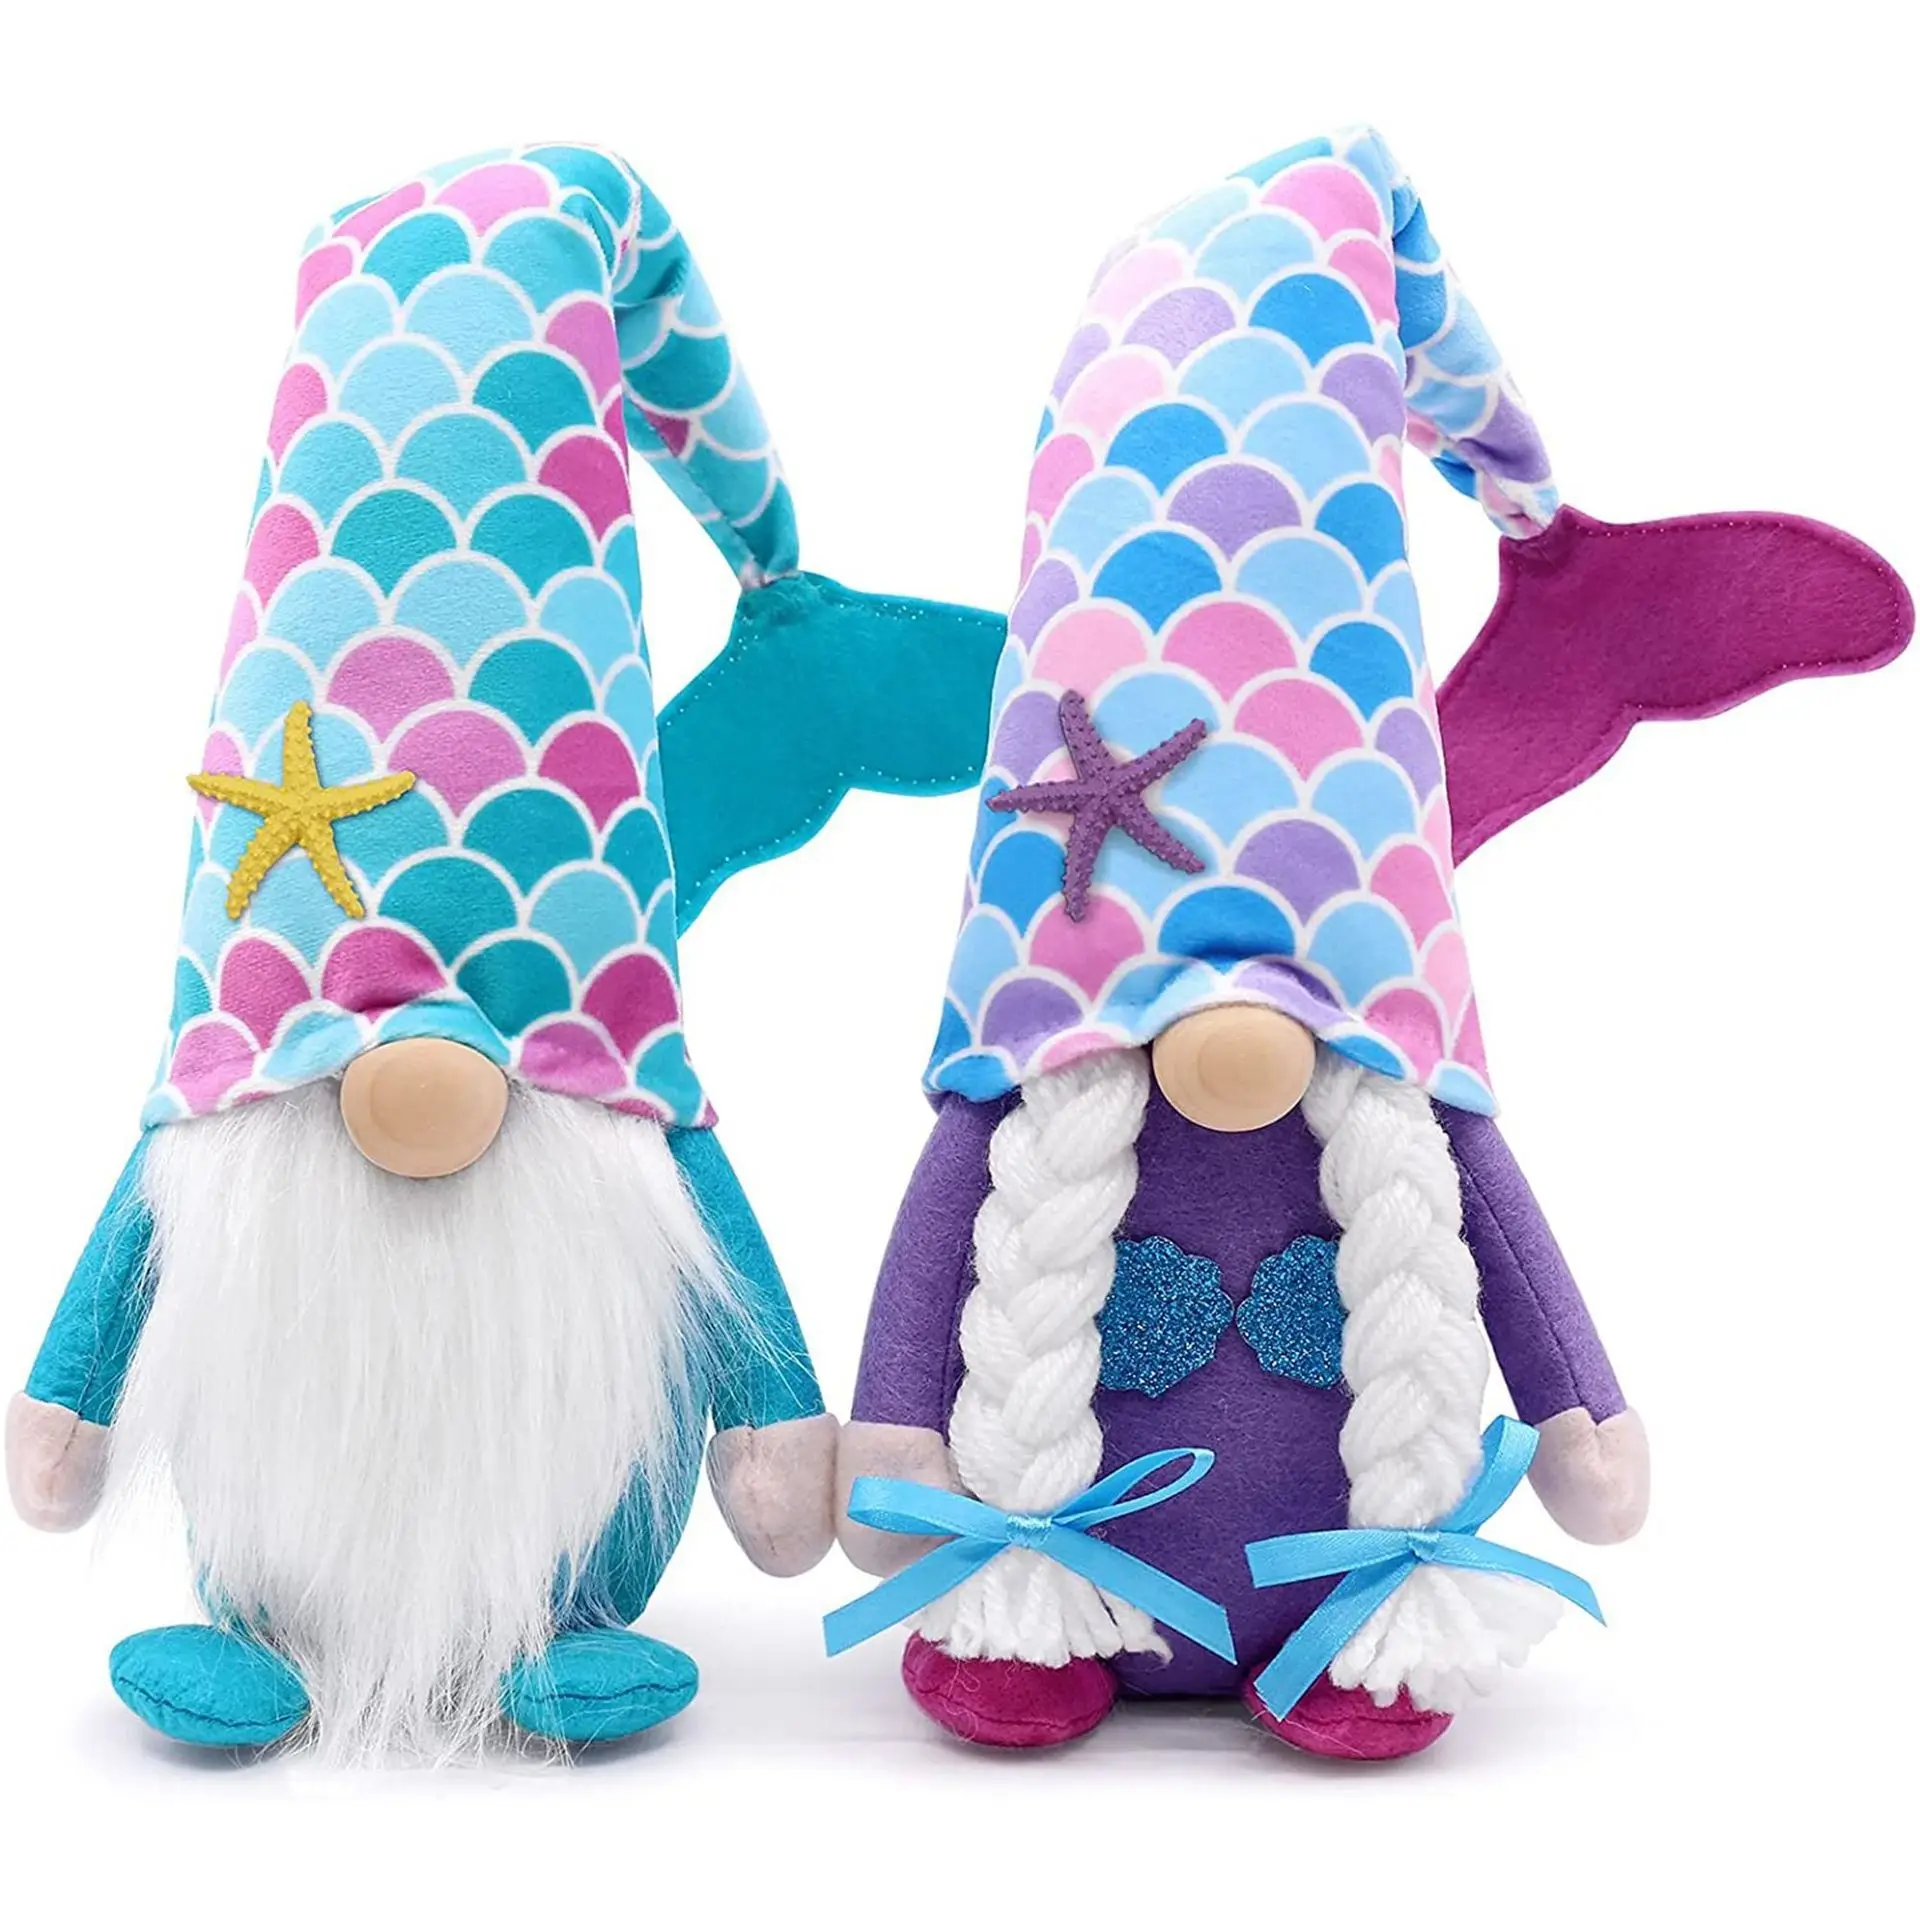 Keluaran baru boneka mainan mewah kurcaci musim panas bintang laut laut Shell Gnome boneka mainan mewah untuk dekorasi ornamen dekorasi dapur rumah